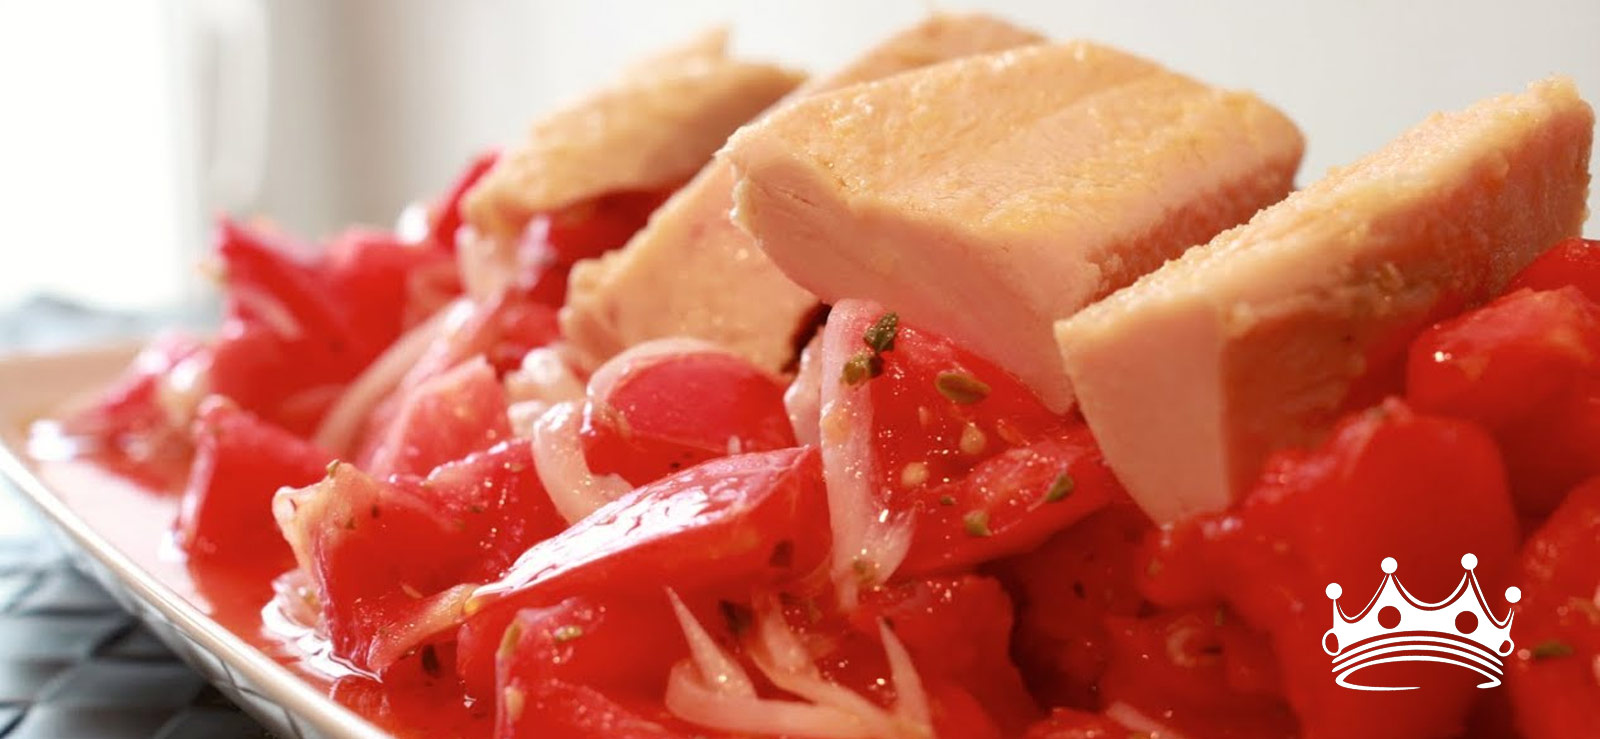 ensalada-de-ventresca-tomate-asador-restaurante-la-reina